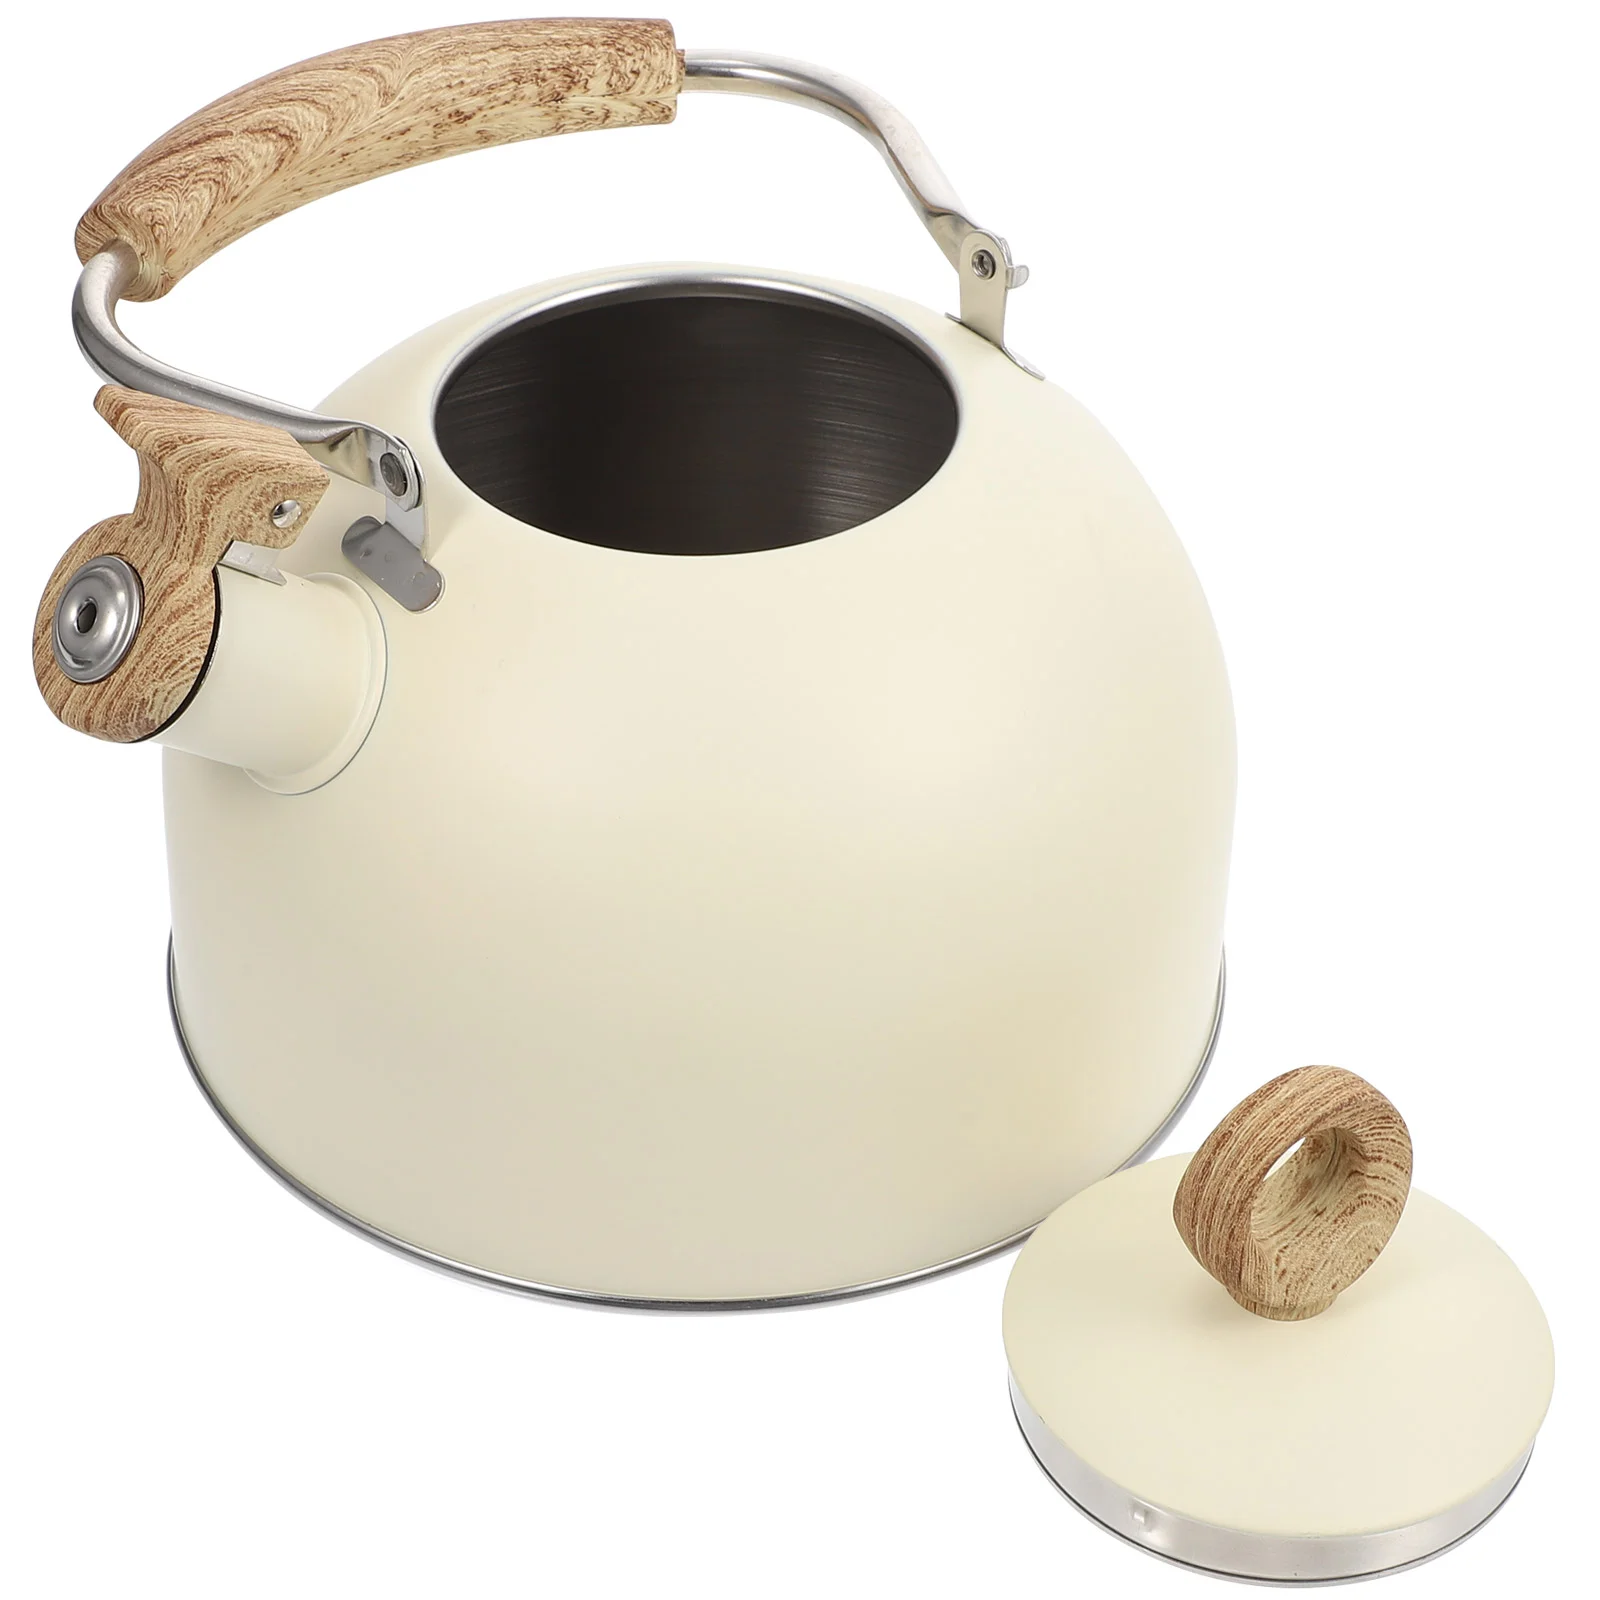 

Kettle Tea Water Stovetop Whistling Steel Stainless Teapot Stove Pot Boiling Kettles Whistle Hot Heater Boiler Heating Kitchen